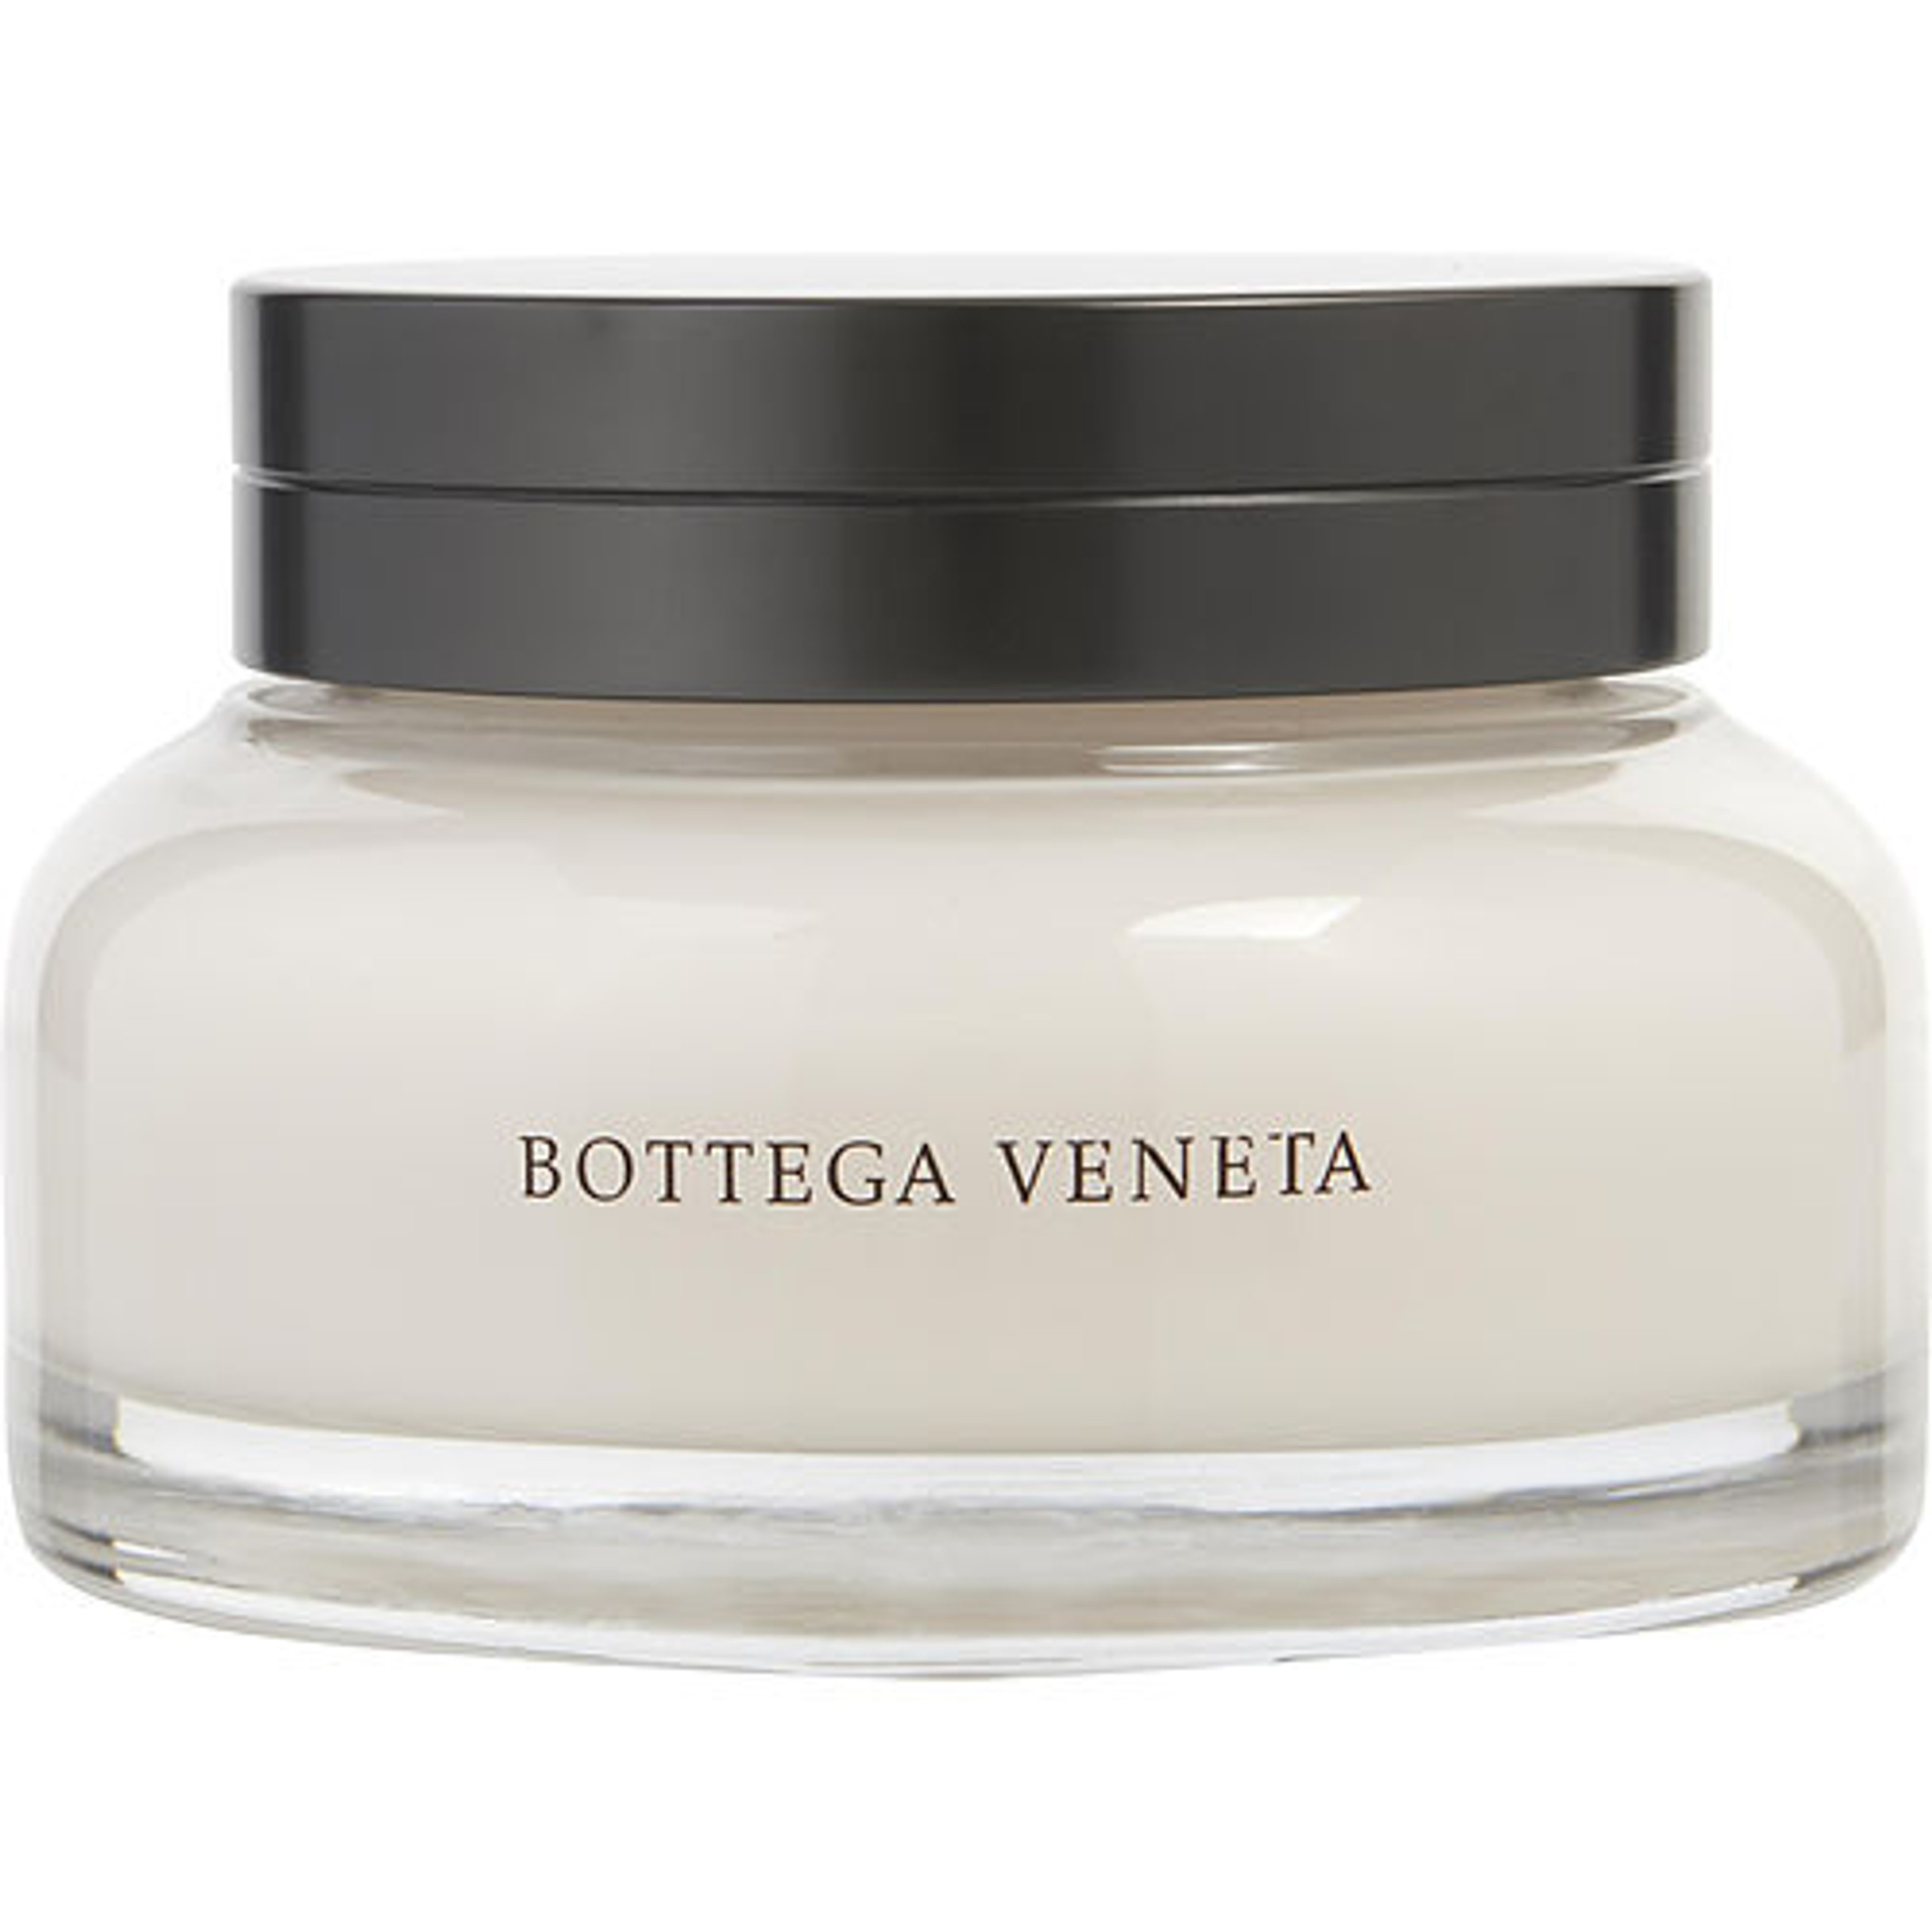 Bottega Veneta by Bottega Veneta Body Cream 6.7 oz - NuMercy.com